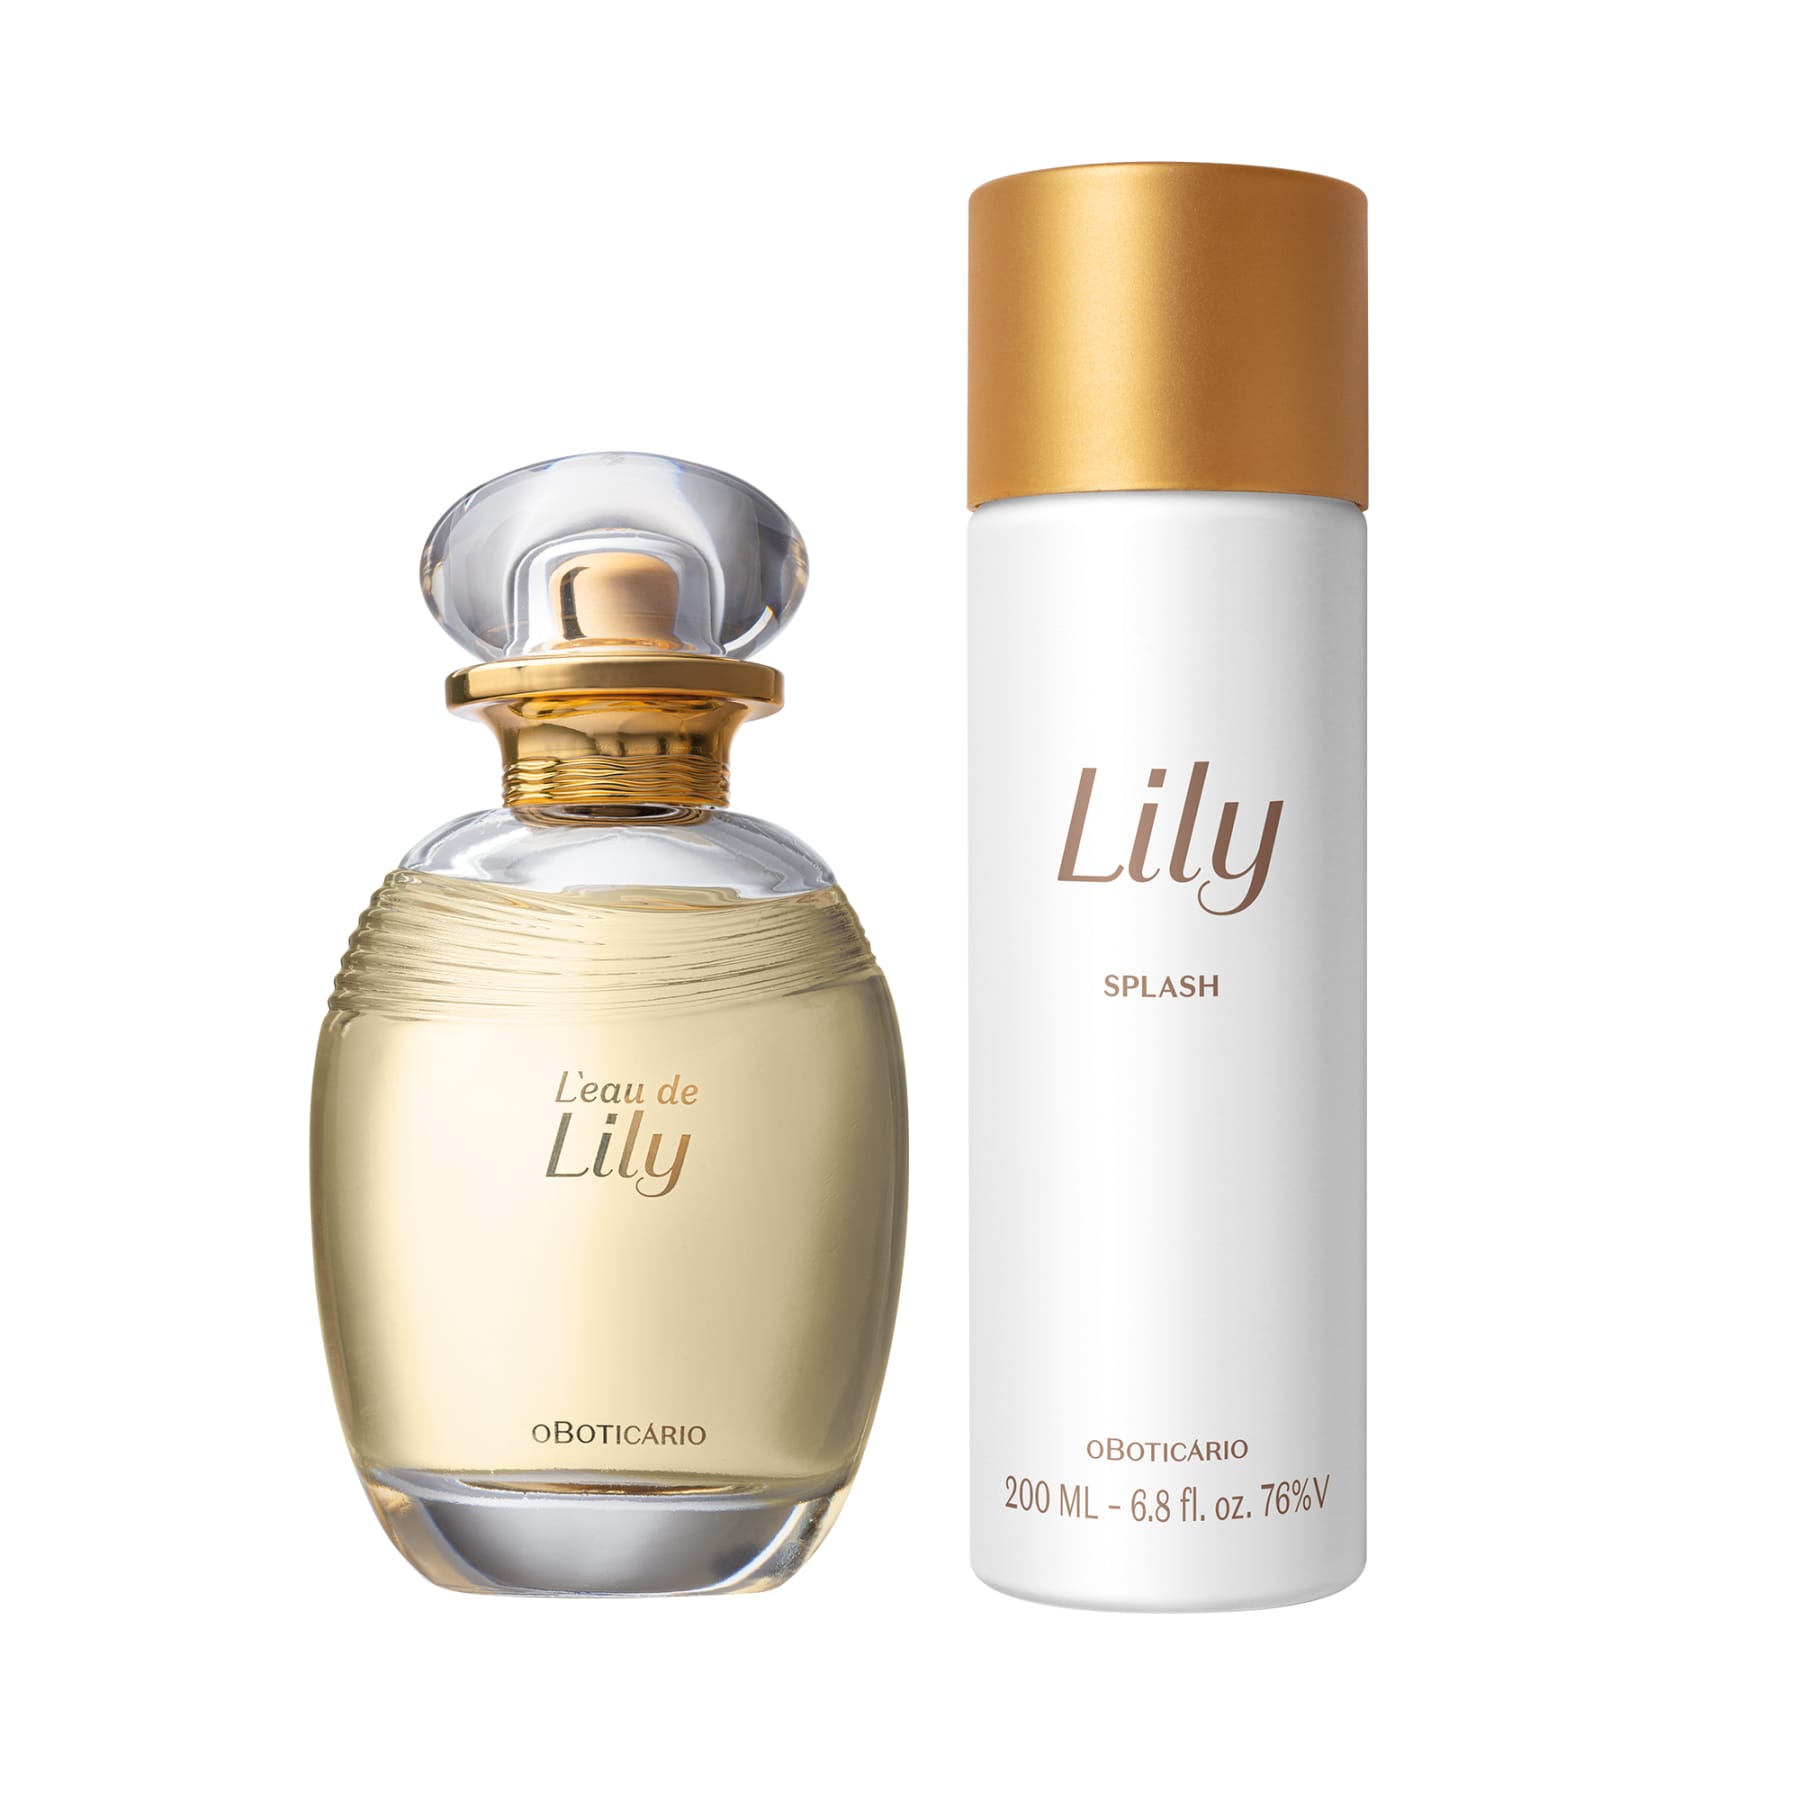 Kit Lily: Deodorant Cologne 75ml + Body Splash Deodorant Cologne 200ml